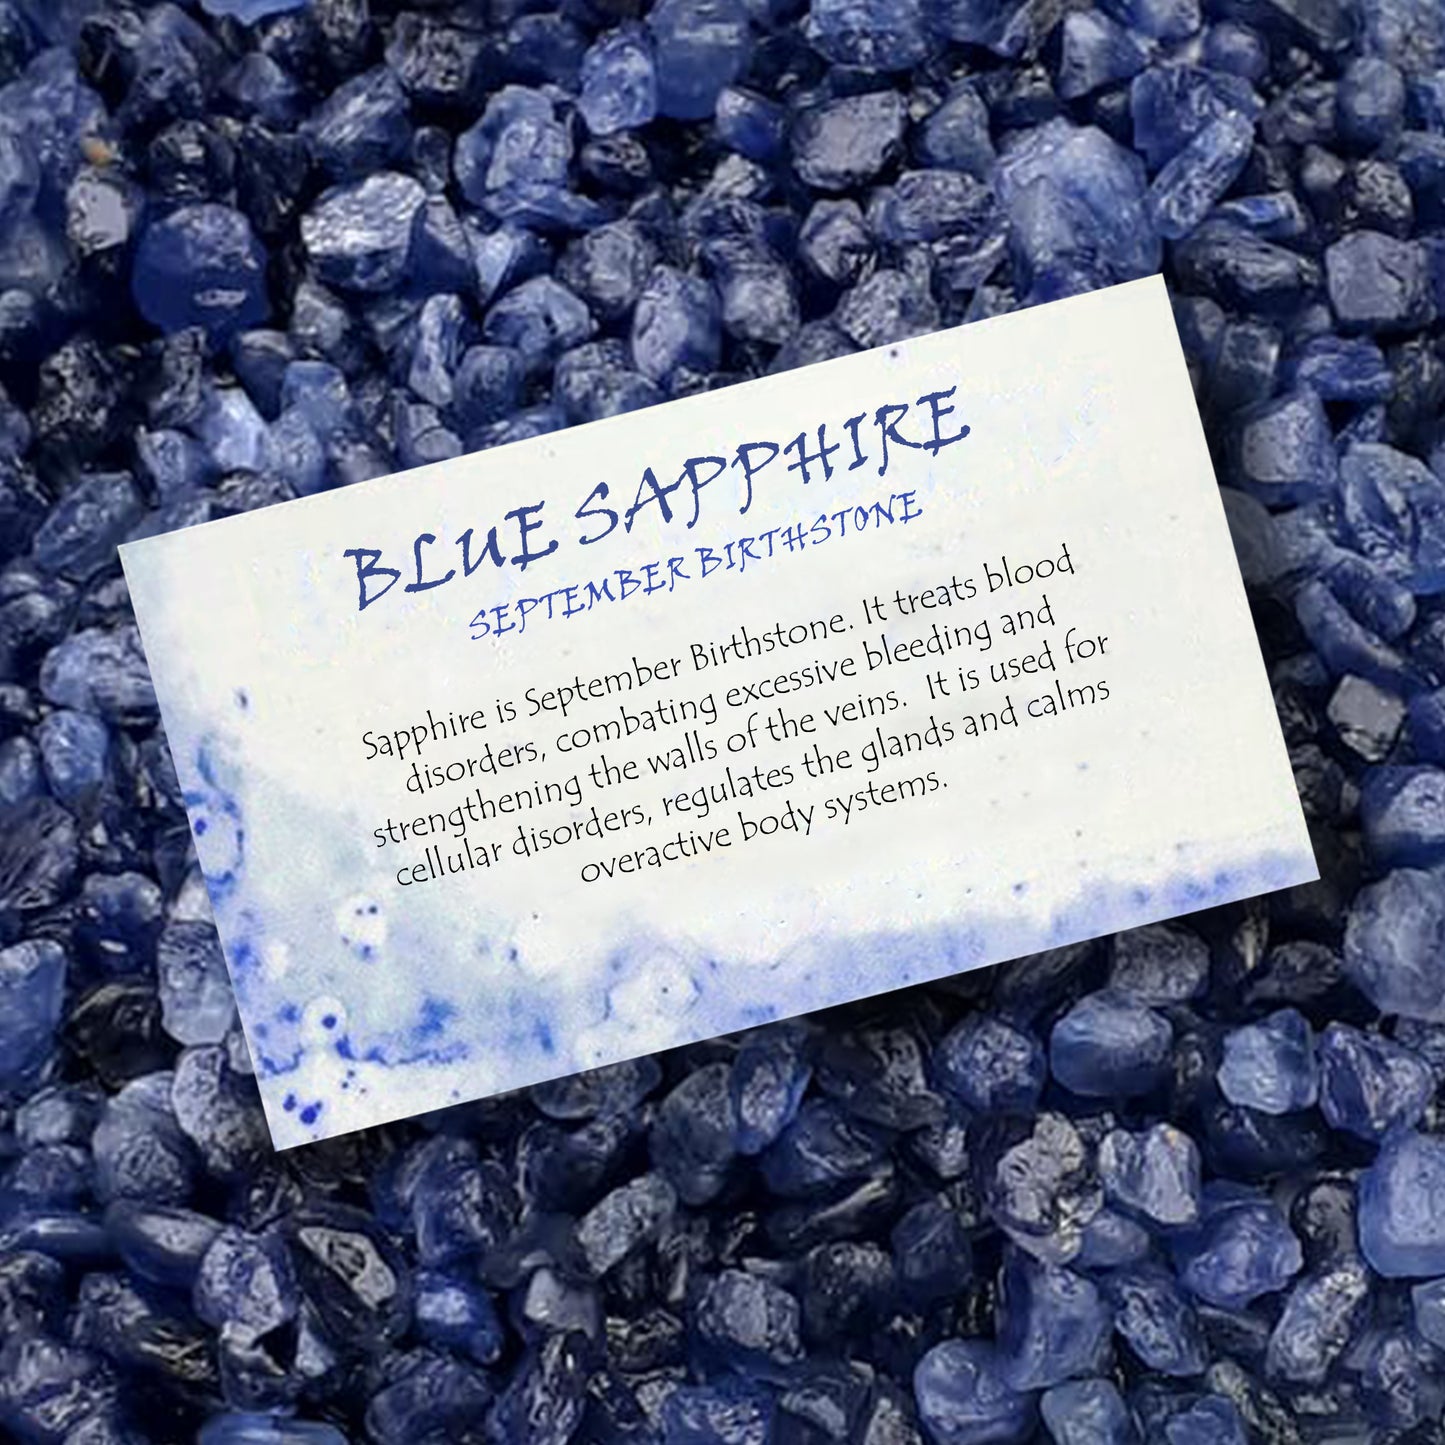 Natural Blue Sapphire Halo Earrings For Her 14k Real Gold White Diamond Earrings 6x4mm Oval Cut Gemstone Surprise Gift Earrings